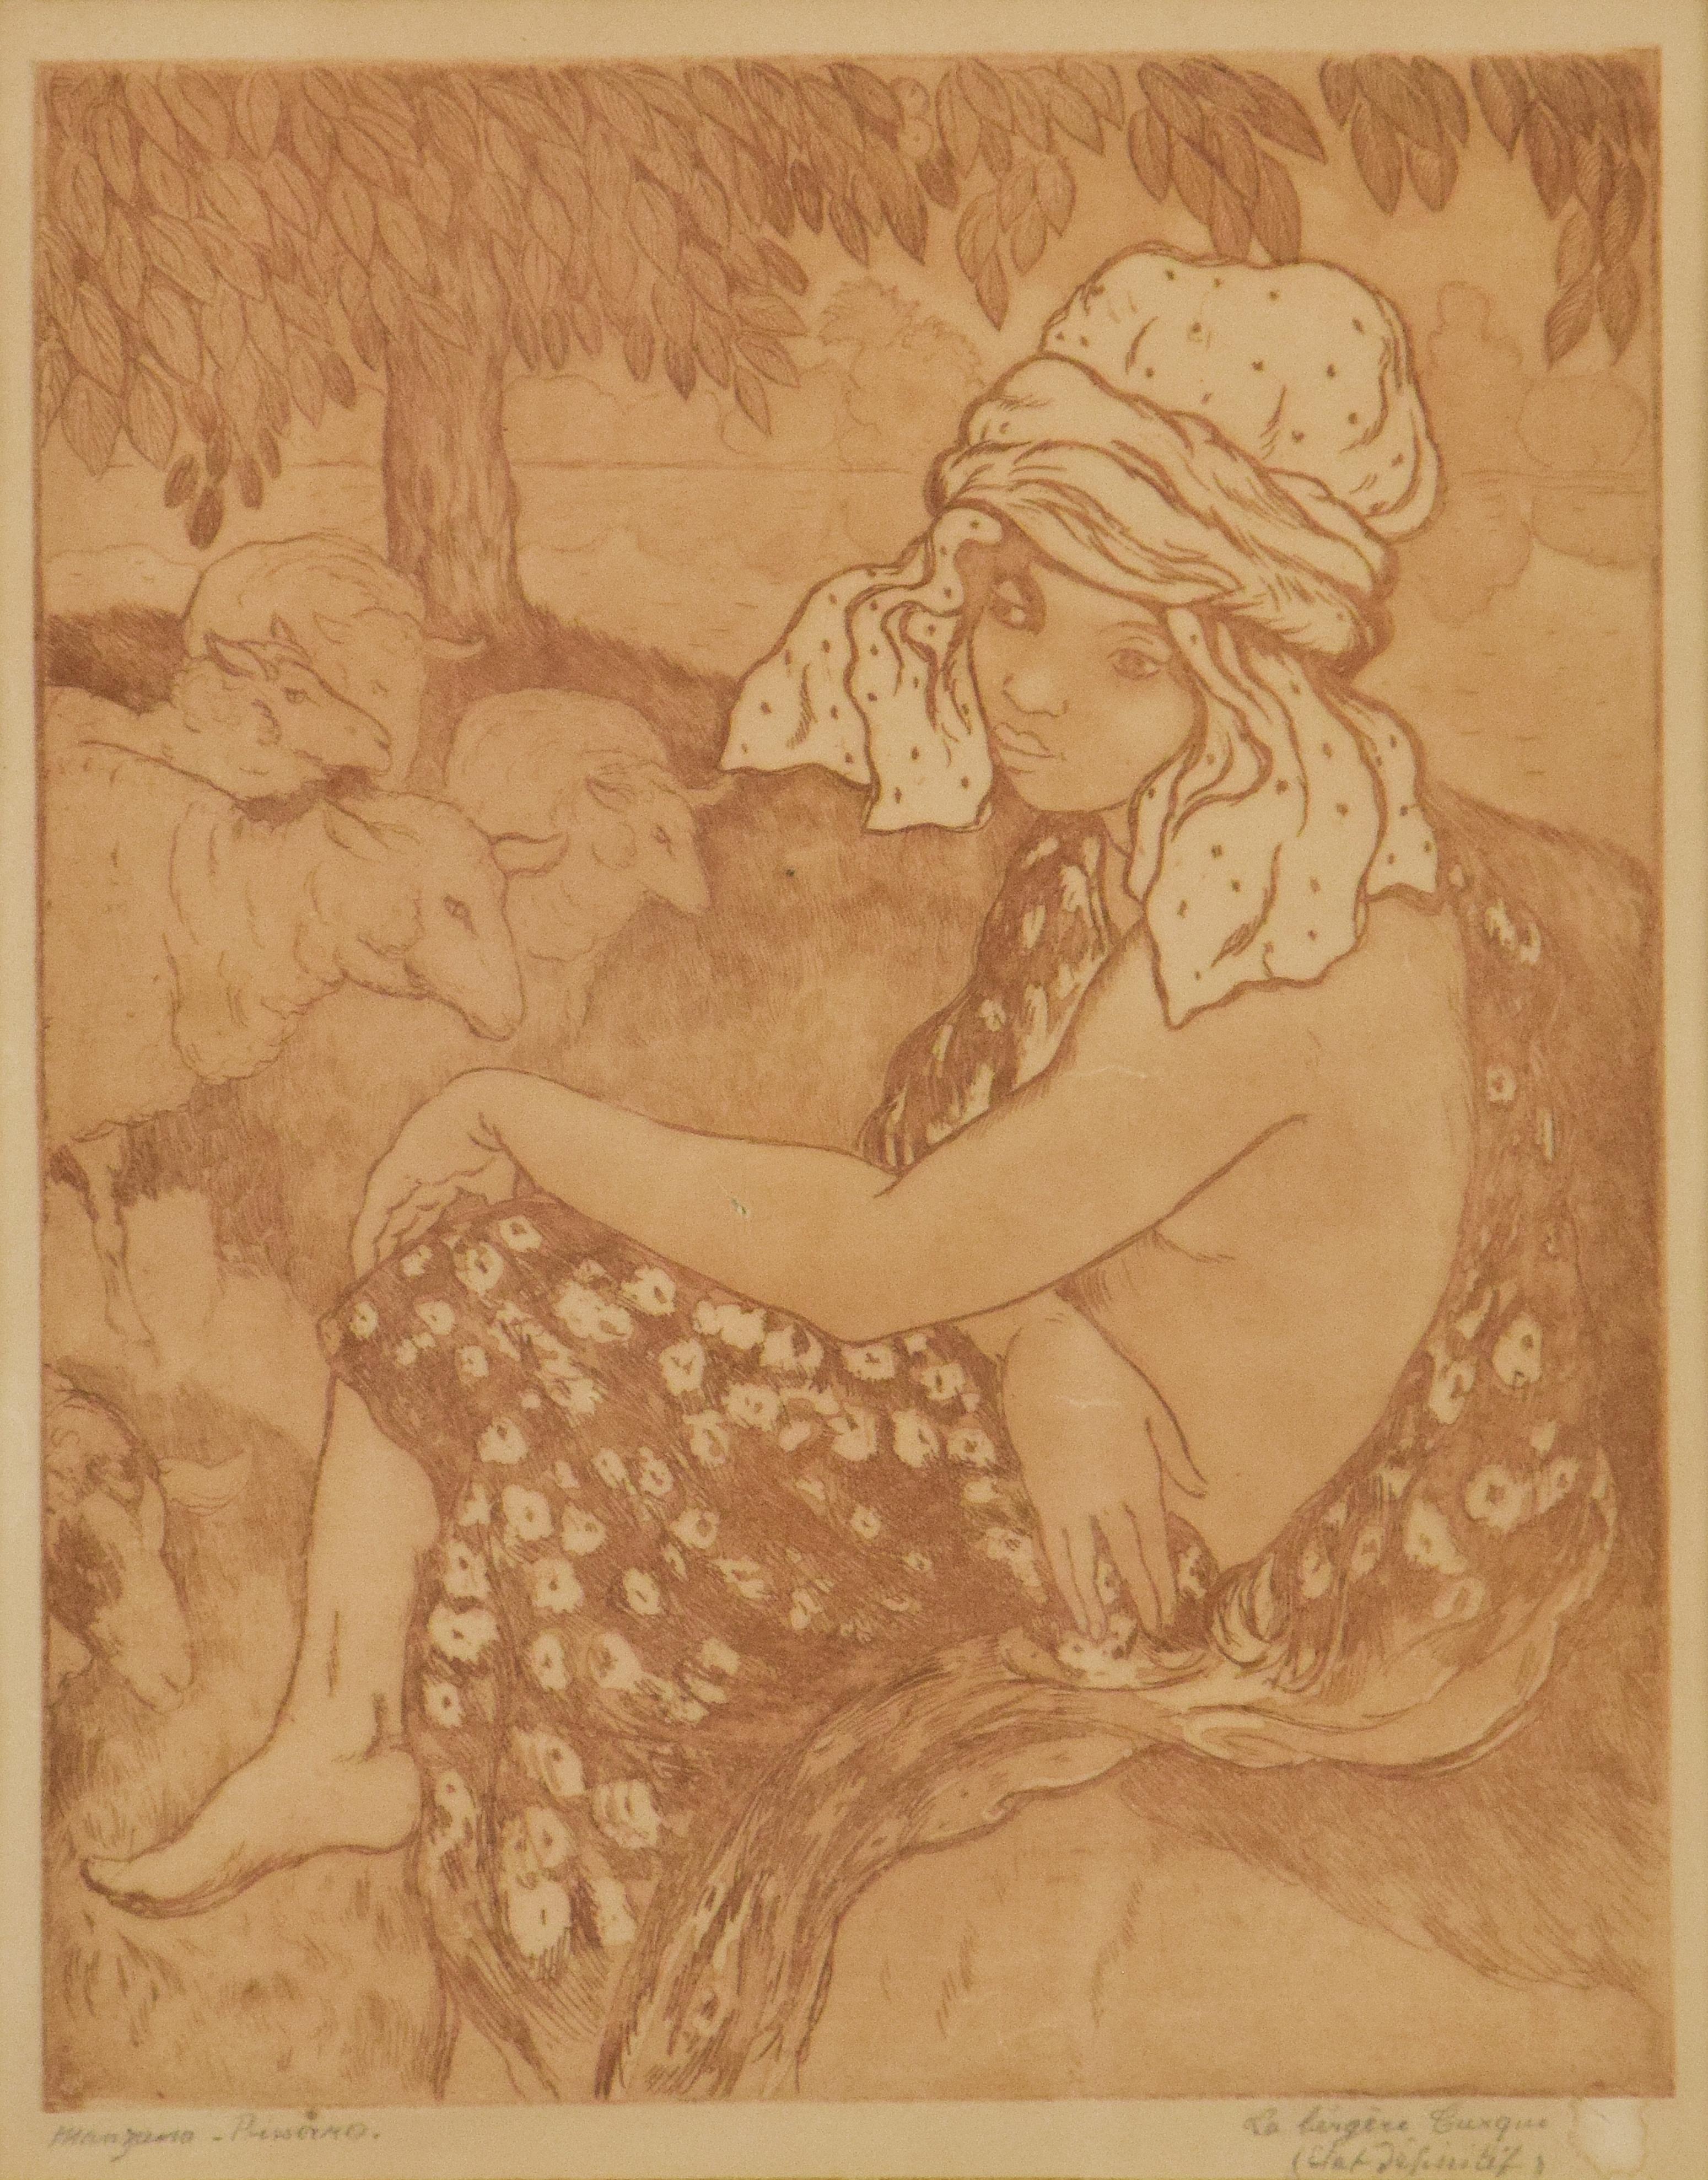 Impression de Georges Manzana Pissarro « La Bergre Turque » (La bergere turque)